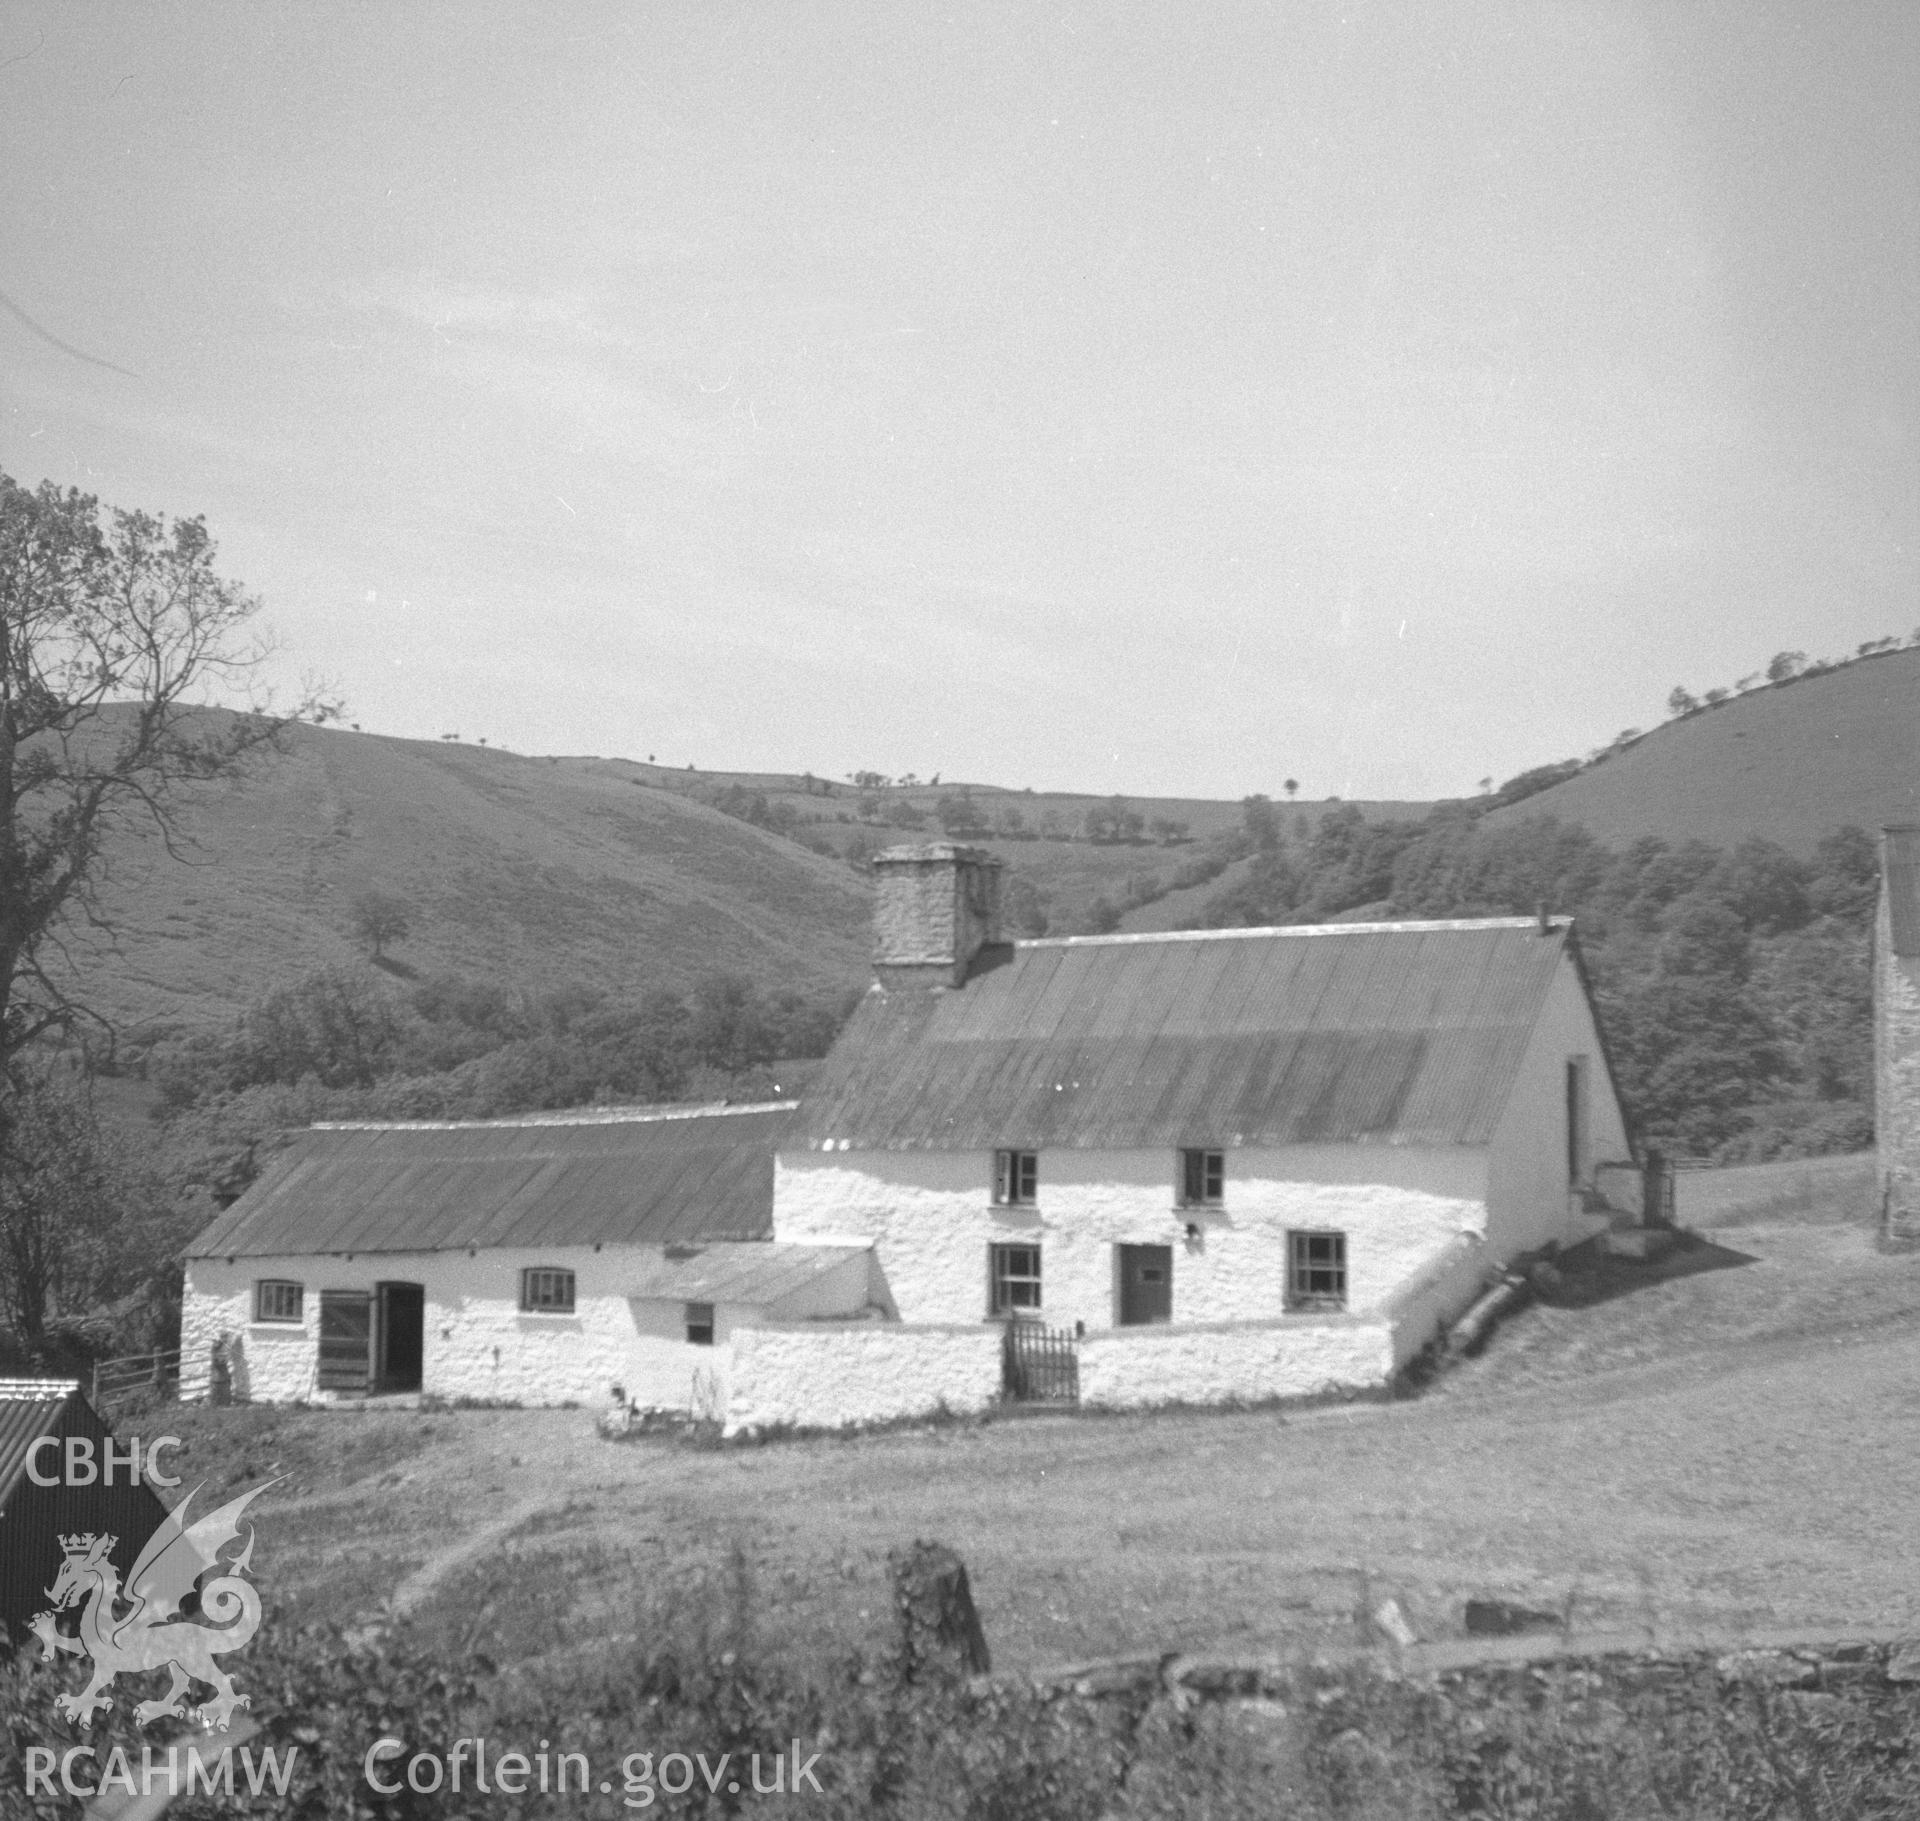 Digital copy of a nitrate negative showing exterior view of Cwm Cilath, Llansadwrn.